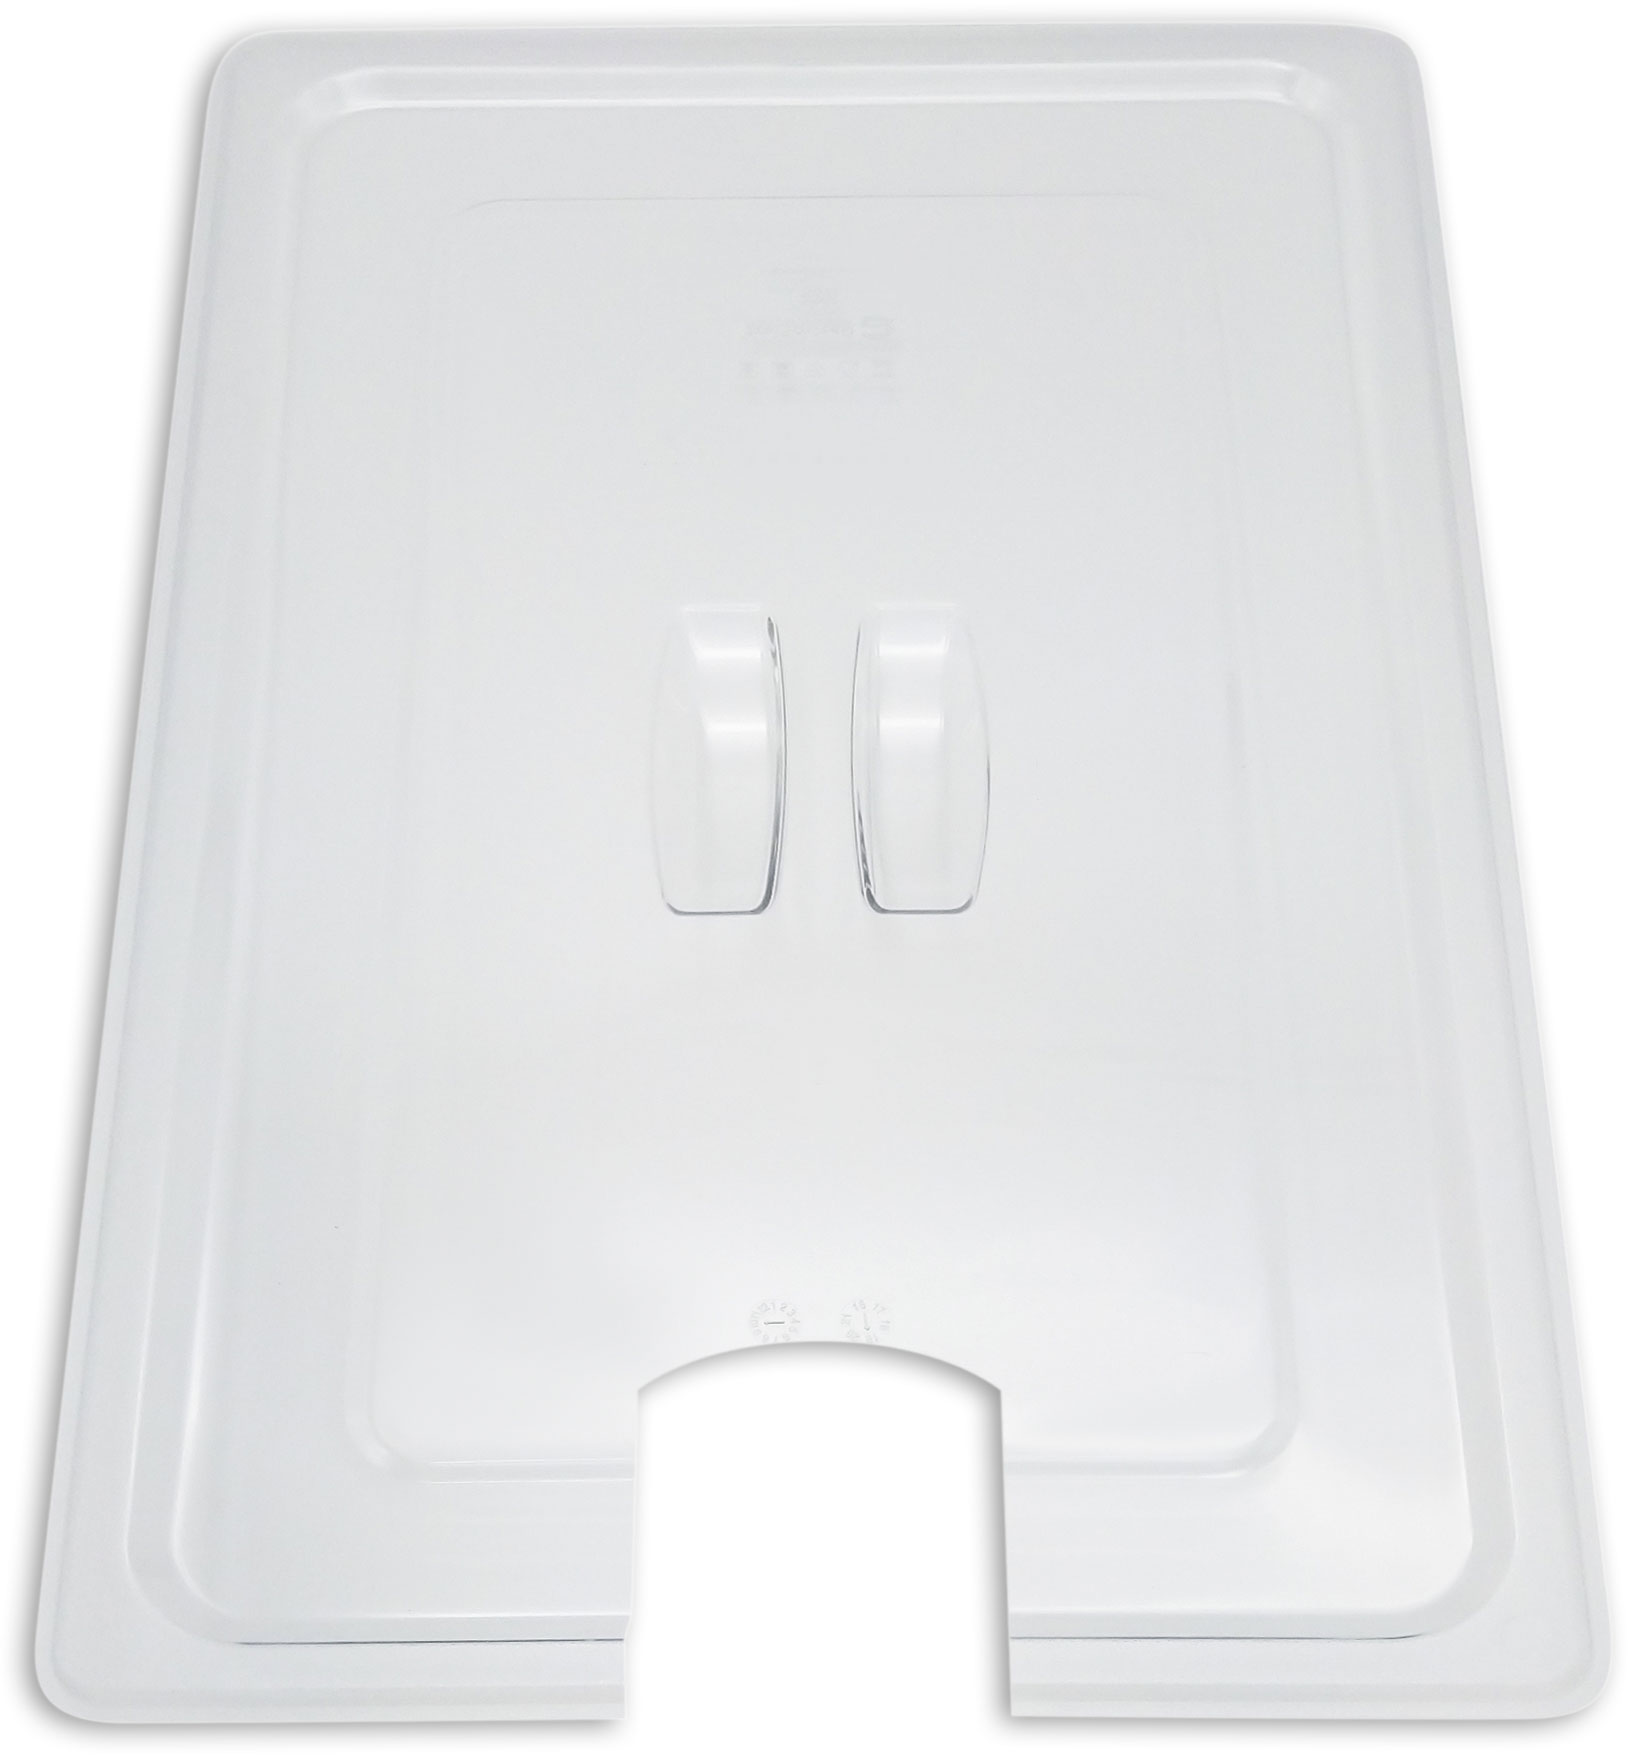 Ziva Medium sous-vide water container + lid